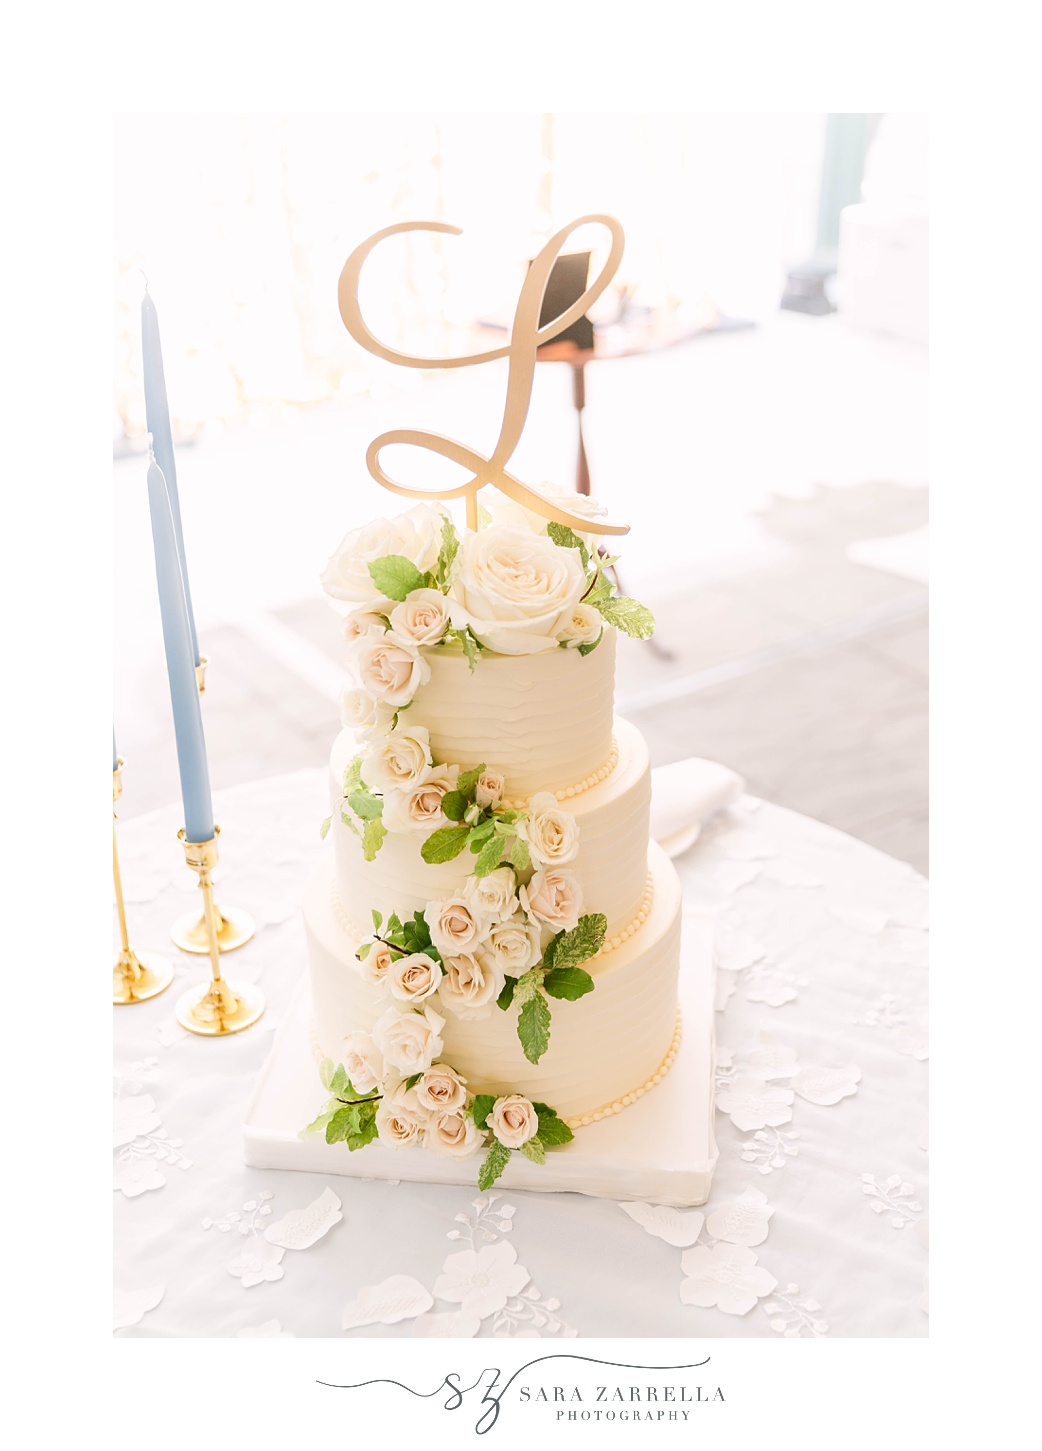 tiered wedding cake for Newport RI wedding reception